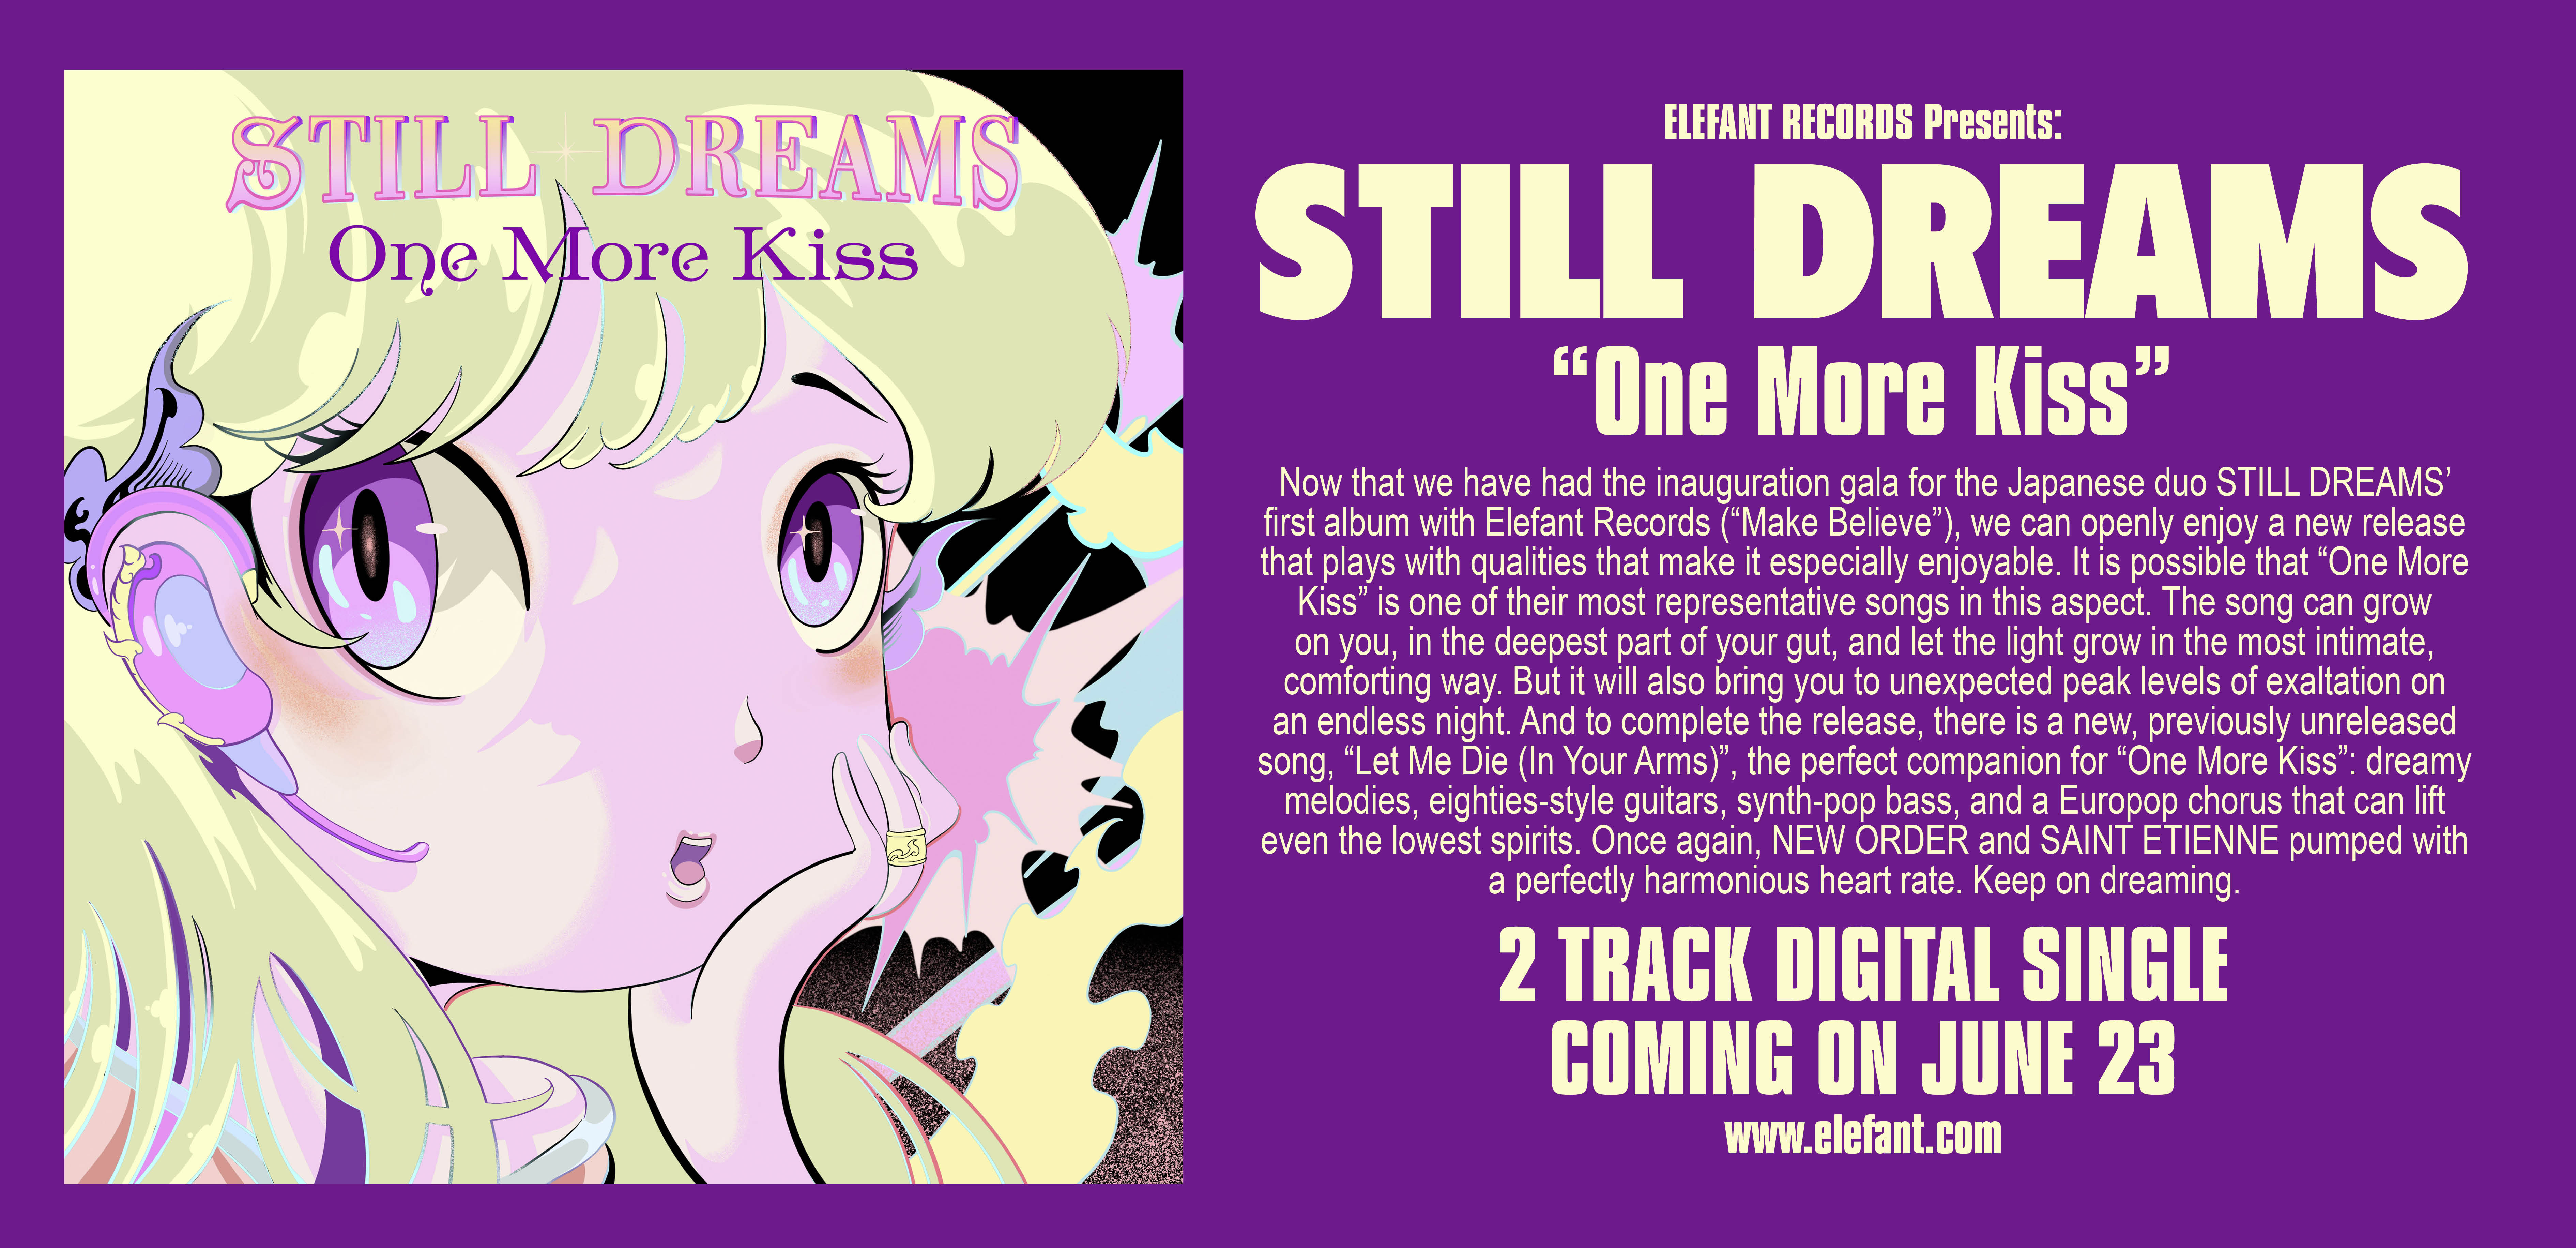 STILL DREAMS "One More Kiss" Single Digital